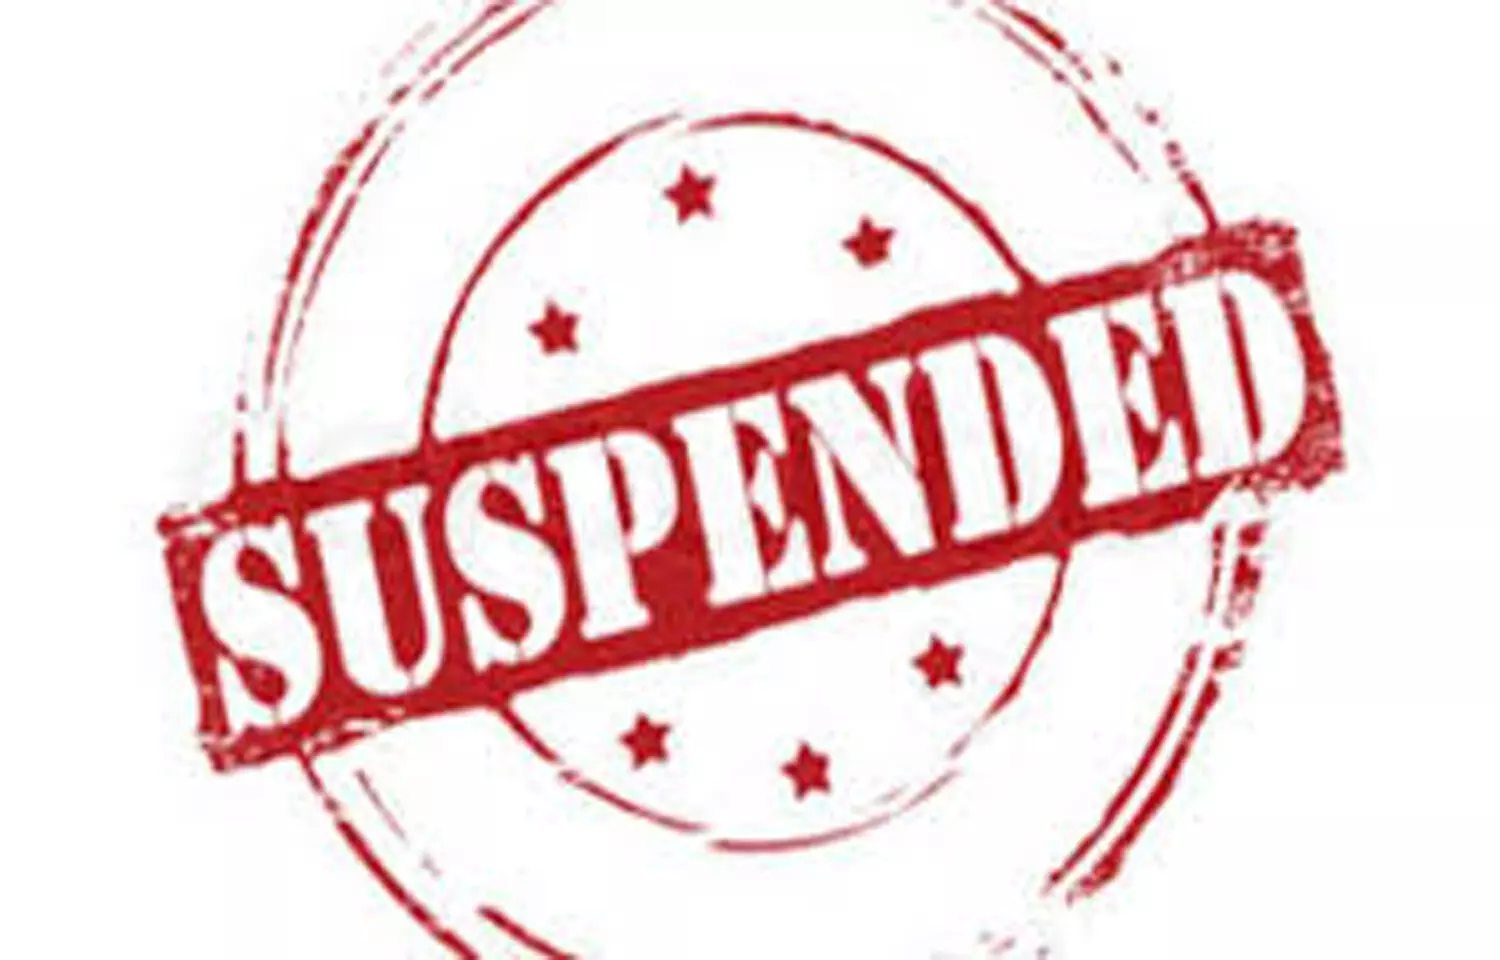 Hospital superintendent suspended after nurse alleges sexual harassment